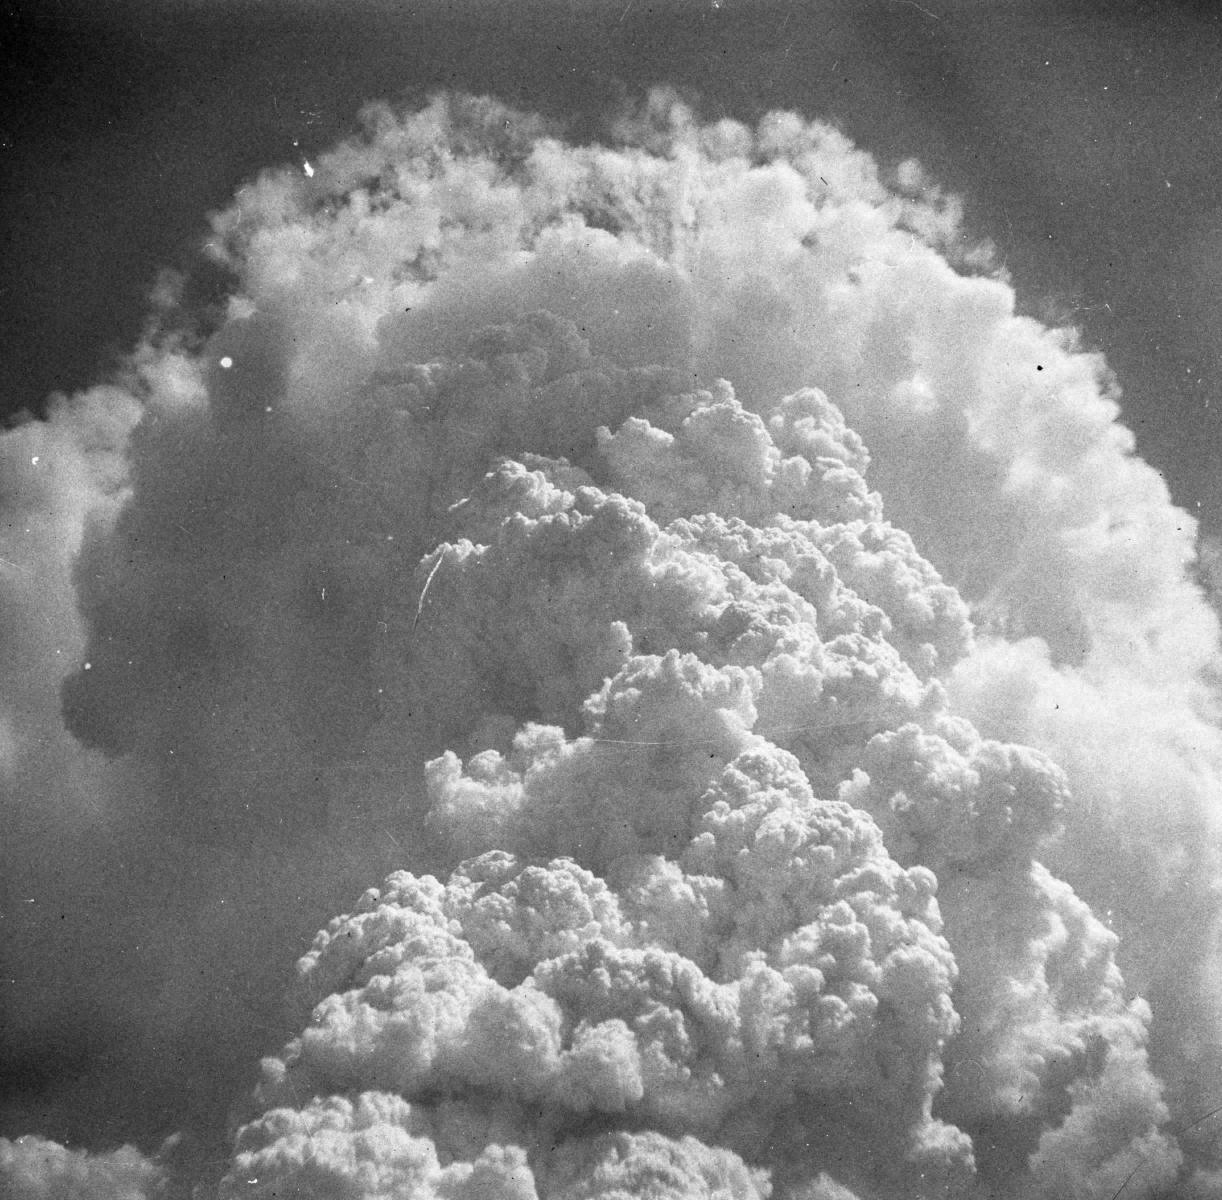 Smoke from the firestorm over Hiroshima